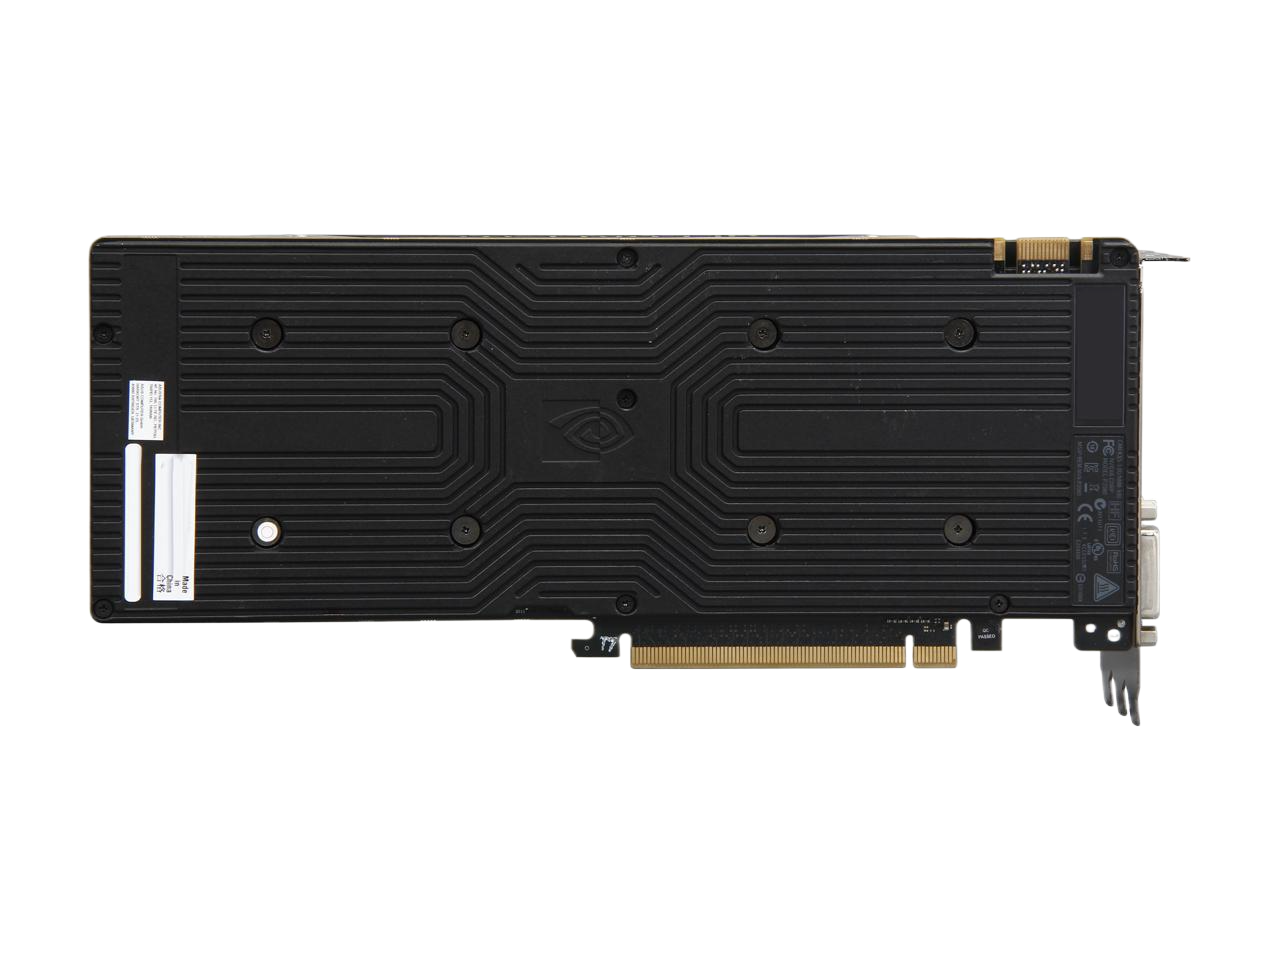 ASUS GeForce GTX TITAN Z 12GB 768-Bit GDDR5 G-SYNC Support PCI Express 3.0 HDCP Ready SLI Support Video Card GTXTITANZ-12GD5